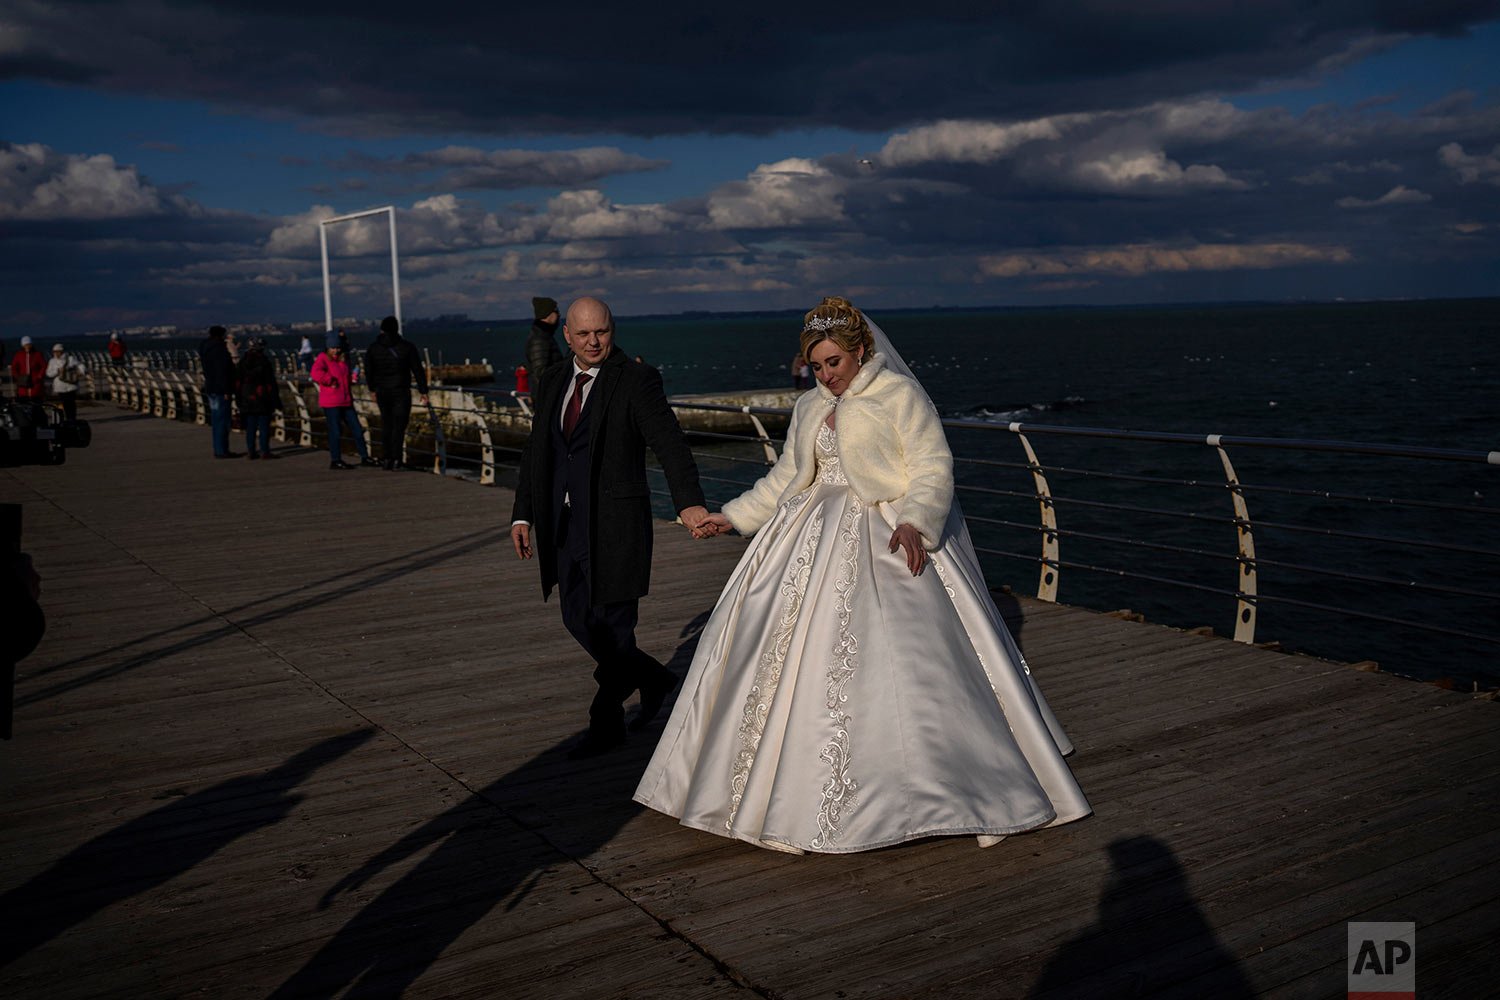  Newlyweds Alexandra Tabashnenko, 27 and Pavel Tabashnenko, 33 walk on a promenade after getting married in Odessa, Ukraine, Friday, Feb. 18, 2022. (AP Photo/Emilio Morenatti) 